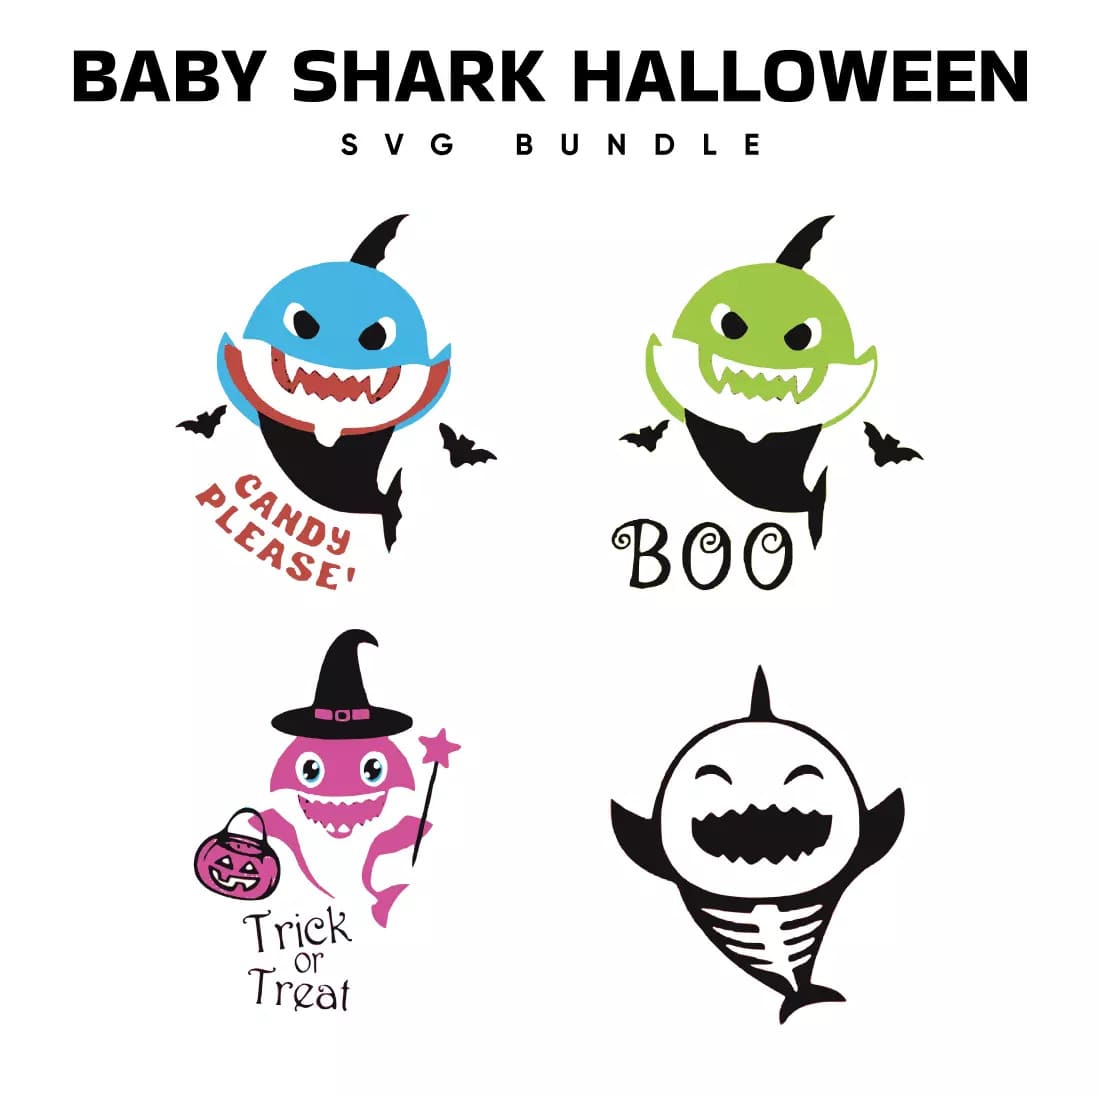 Baby Shark Halloween SVG Bundle PReview image.